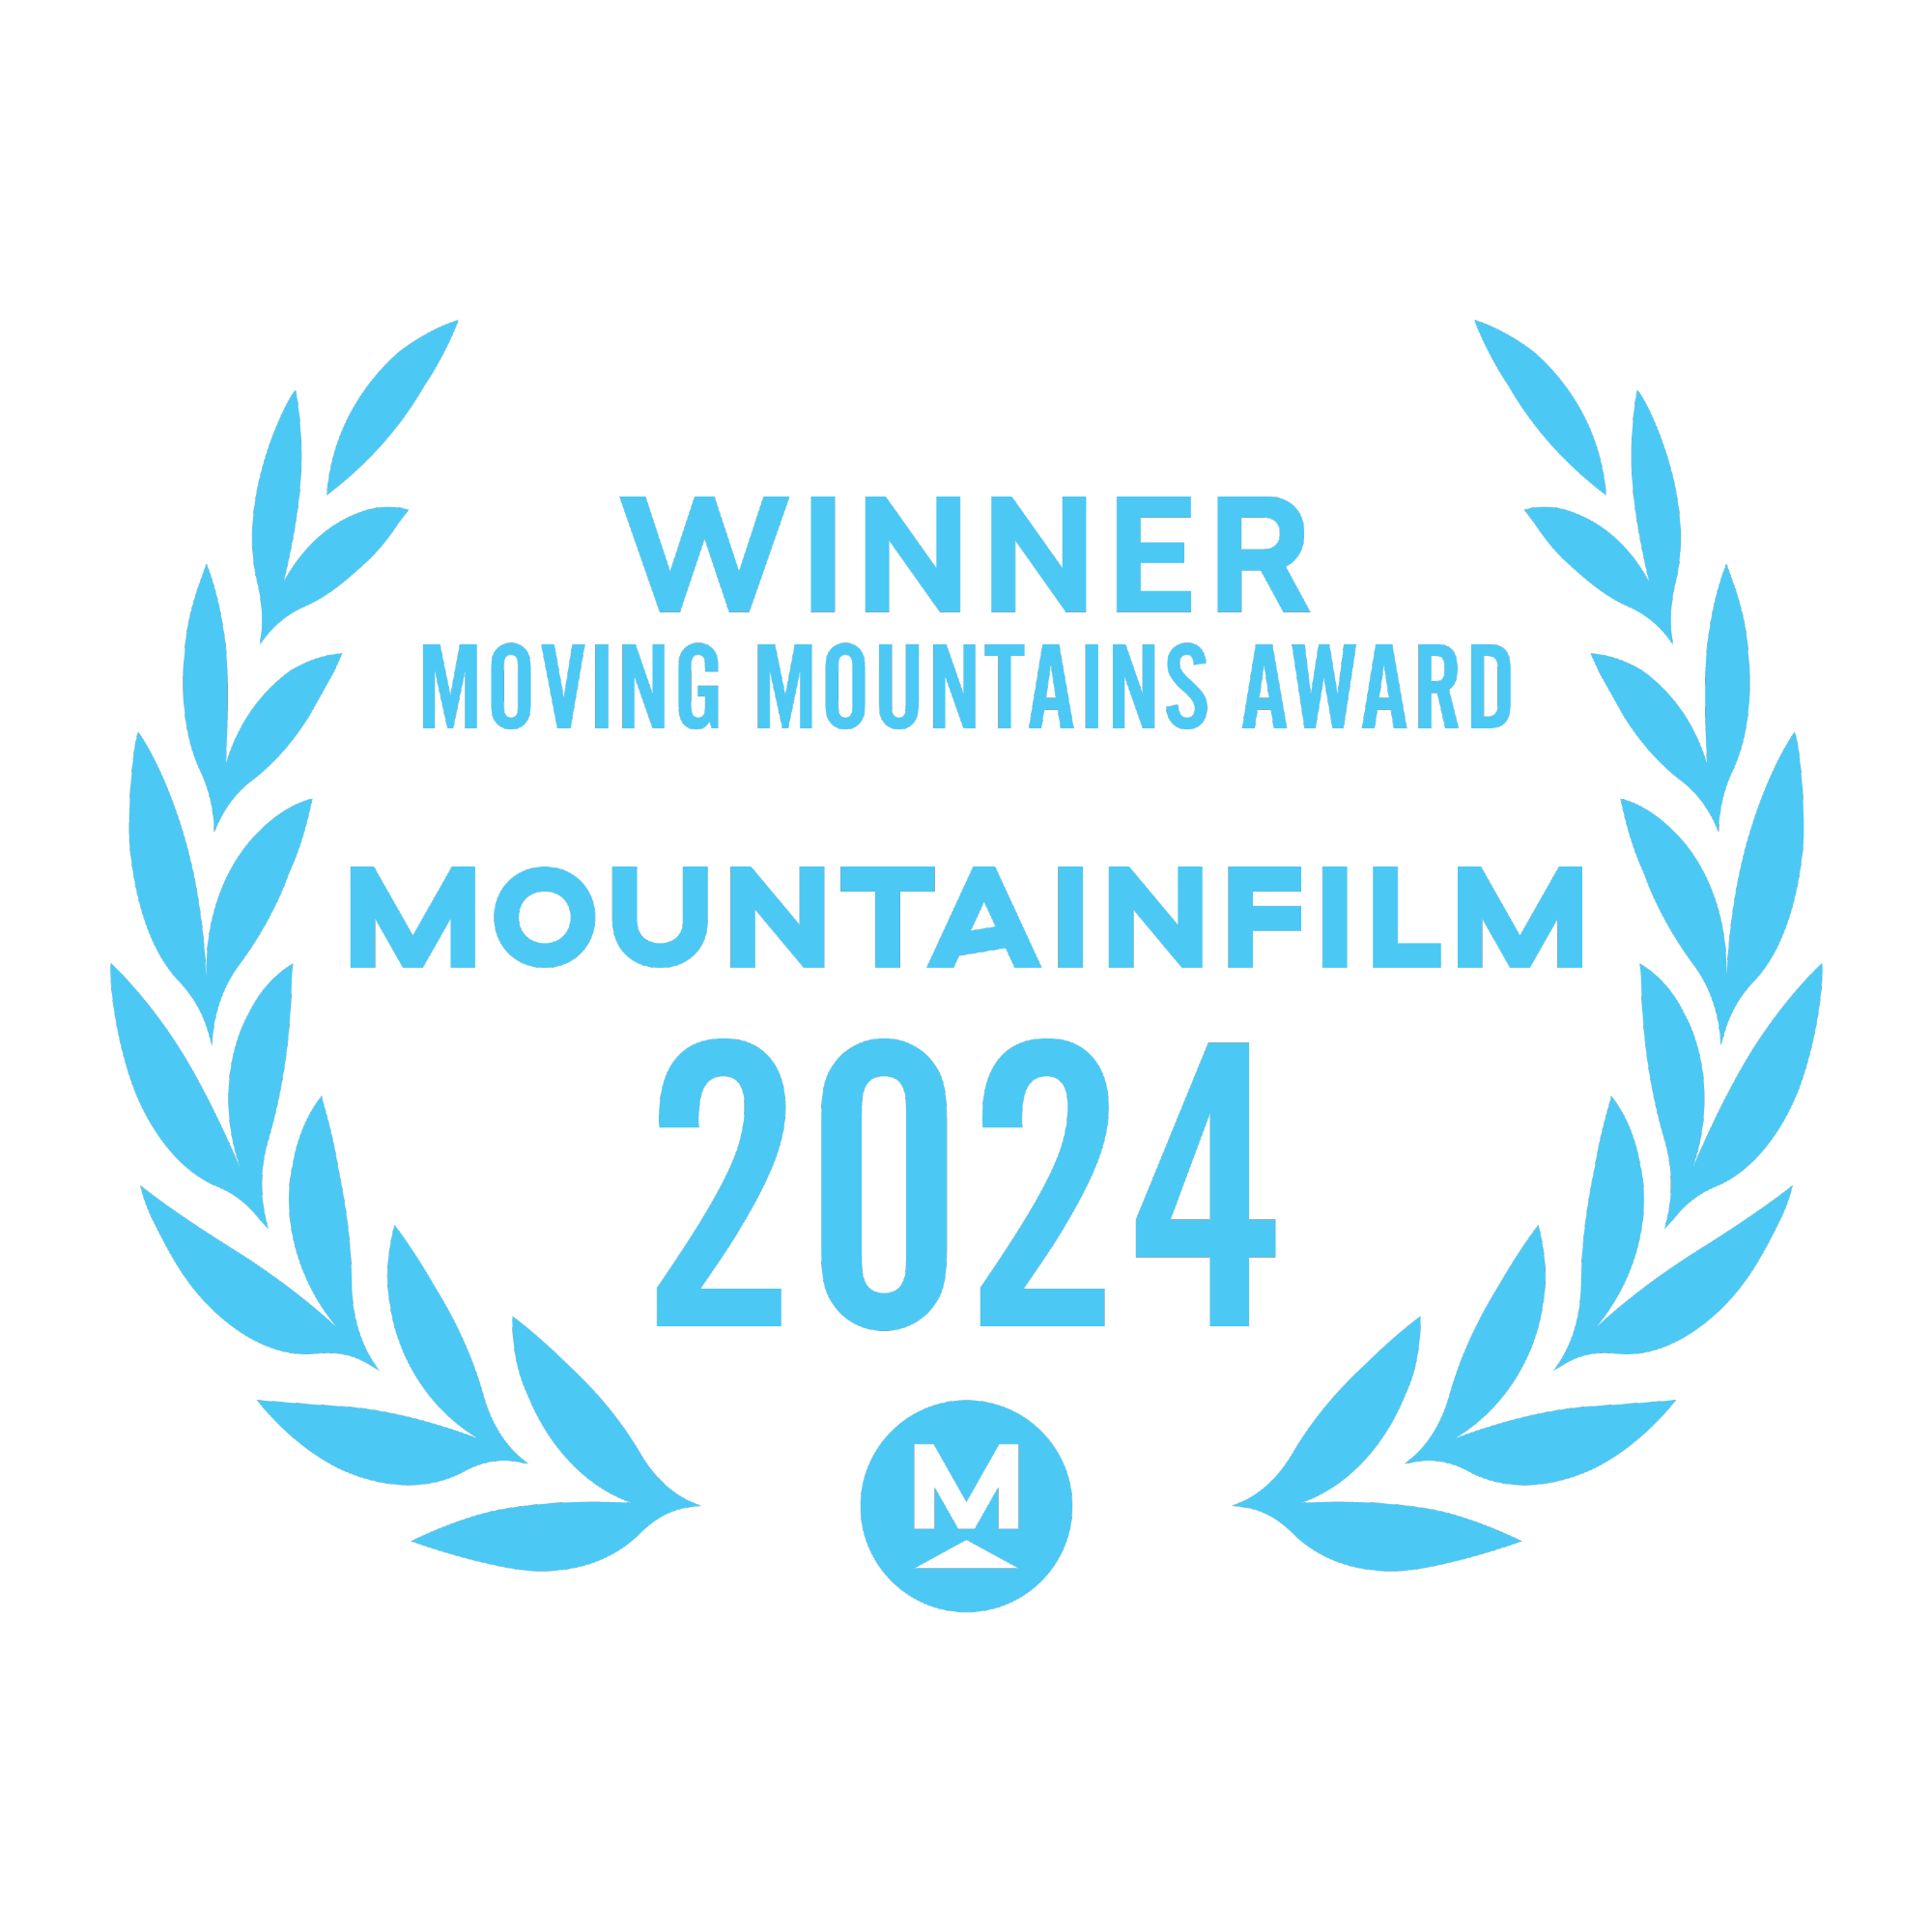 Moving Mountains Award